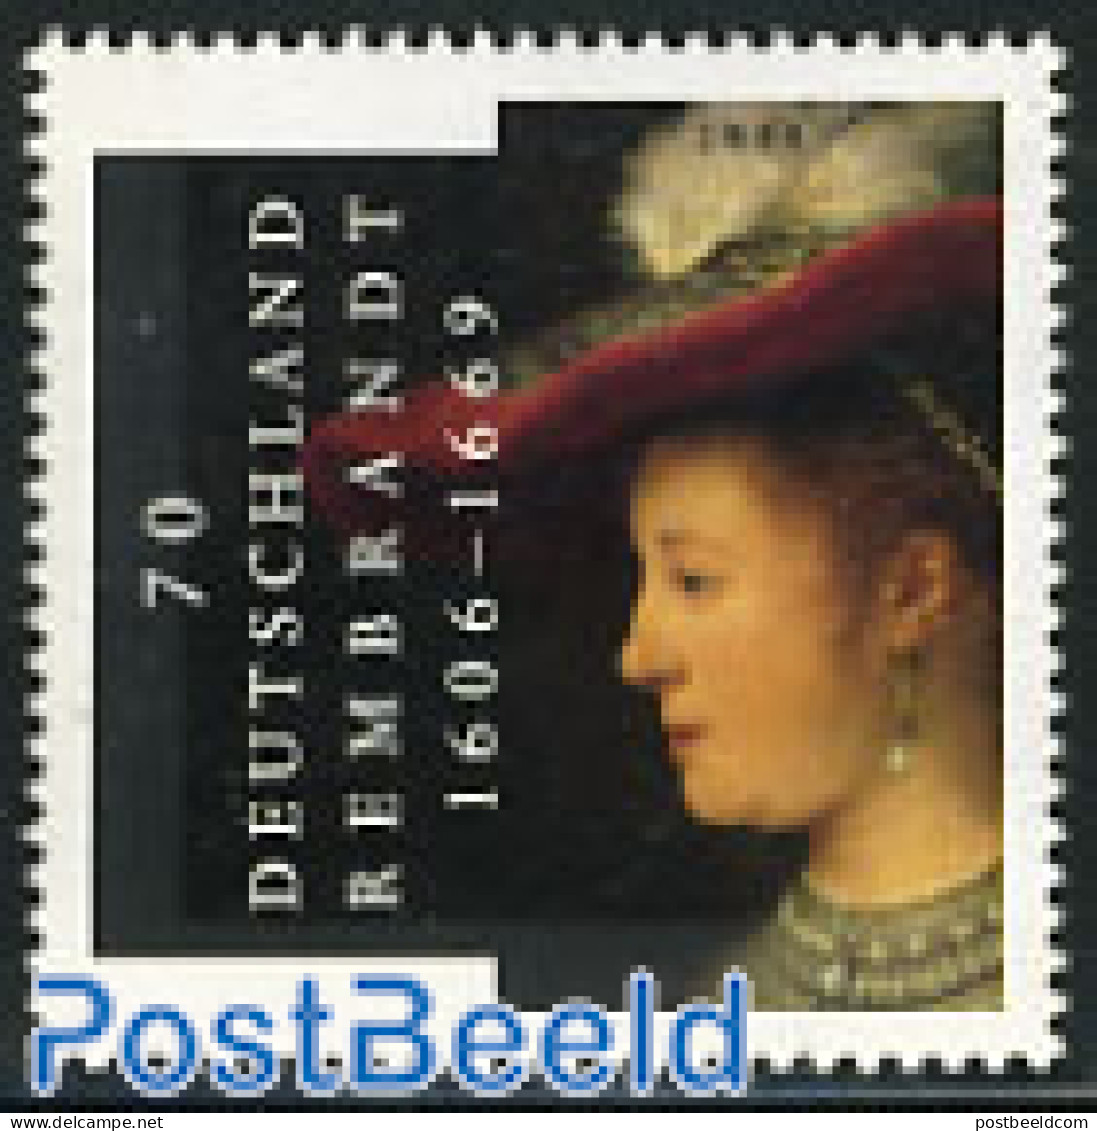 Netherlands 2006 Rembrandt 1v (Only Valid For Postage In Netherland, Mint NH, Art - Paintings - Rembrandt - Ongebruikt